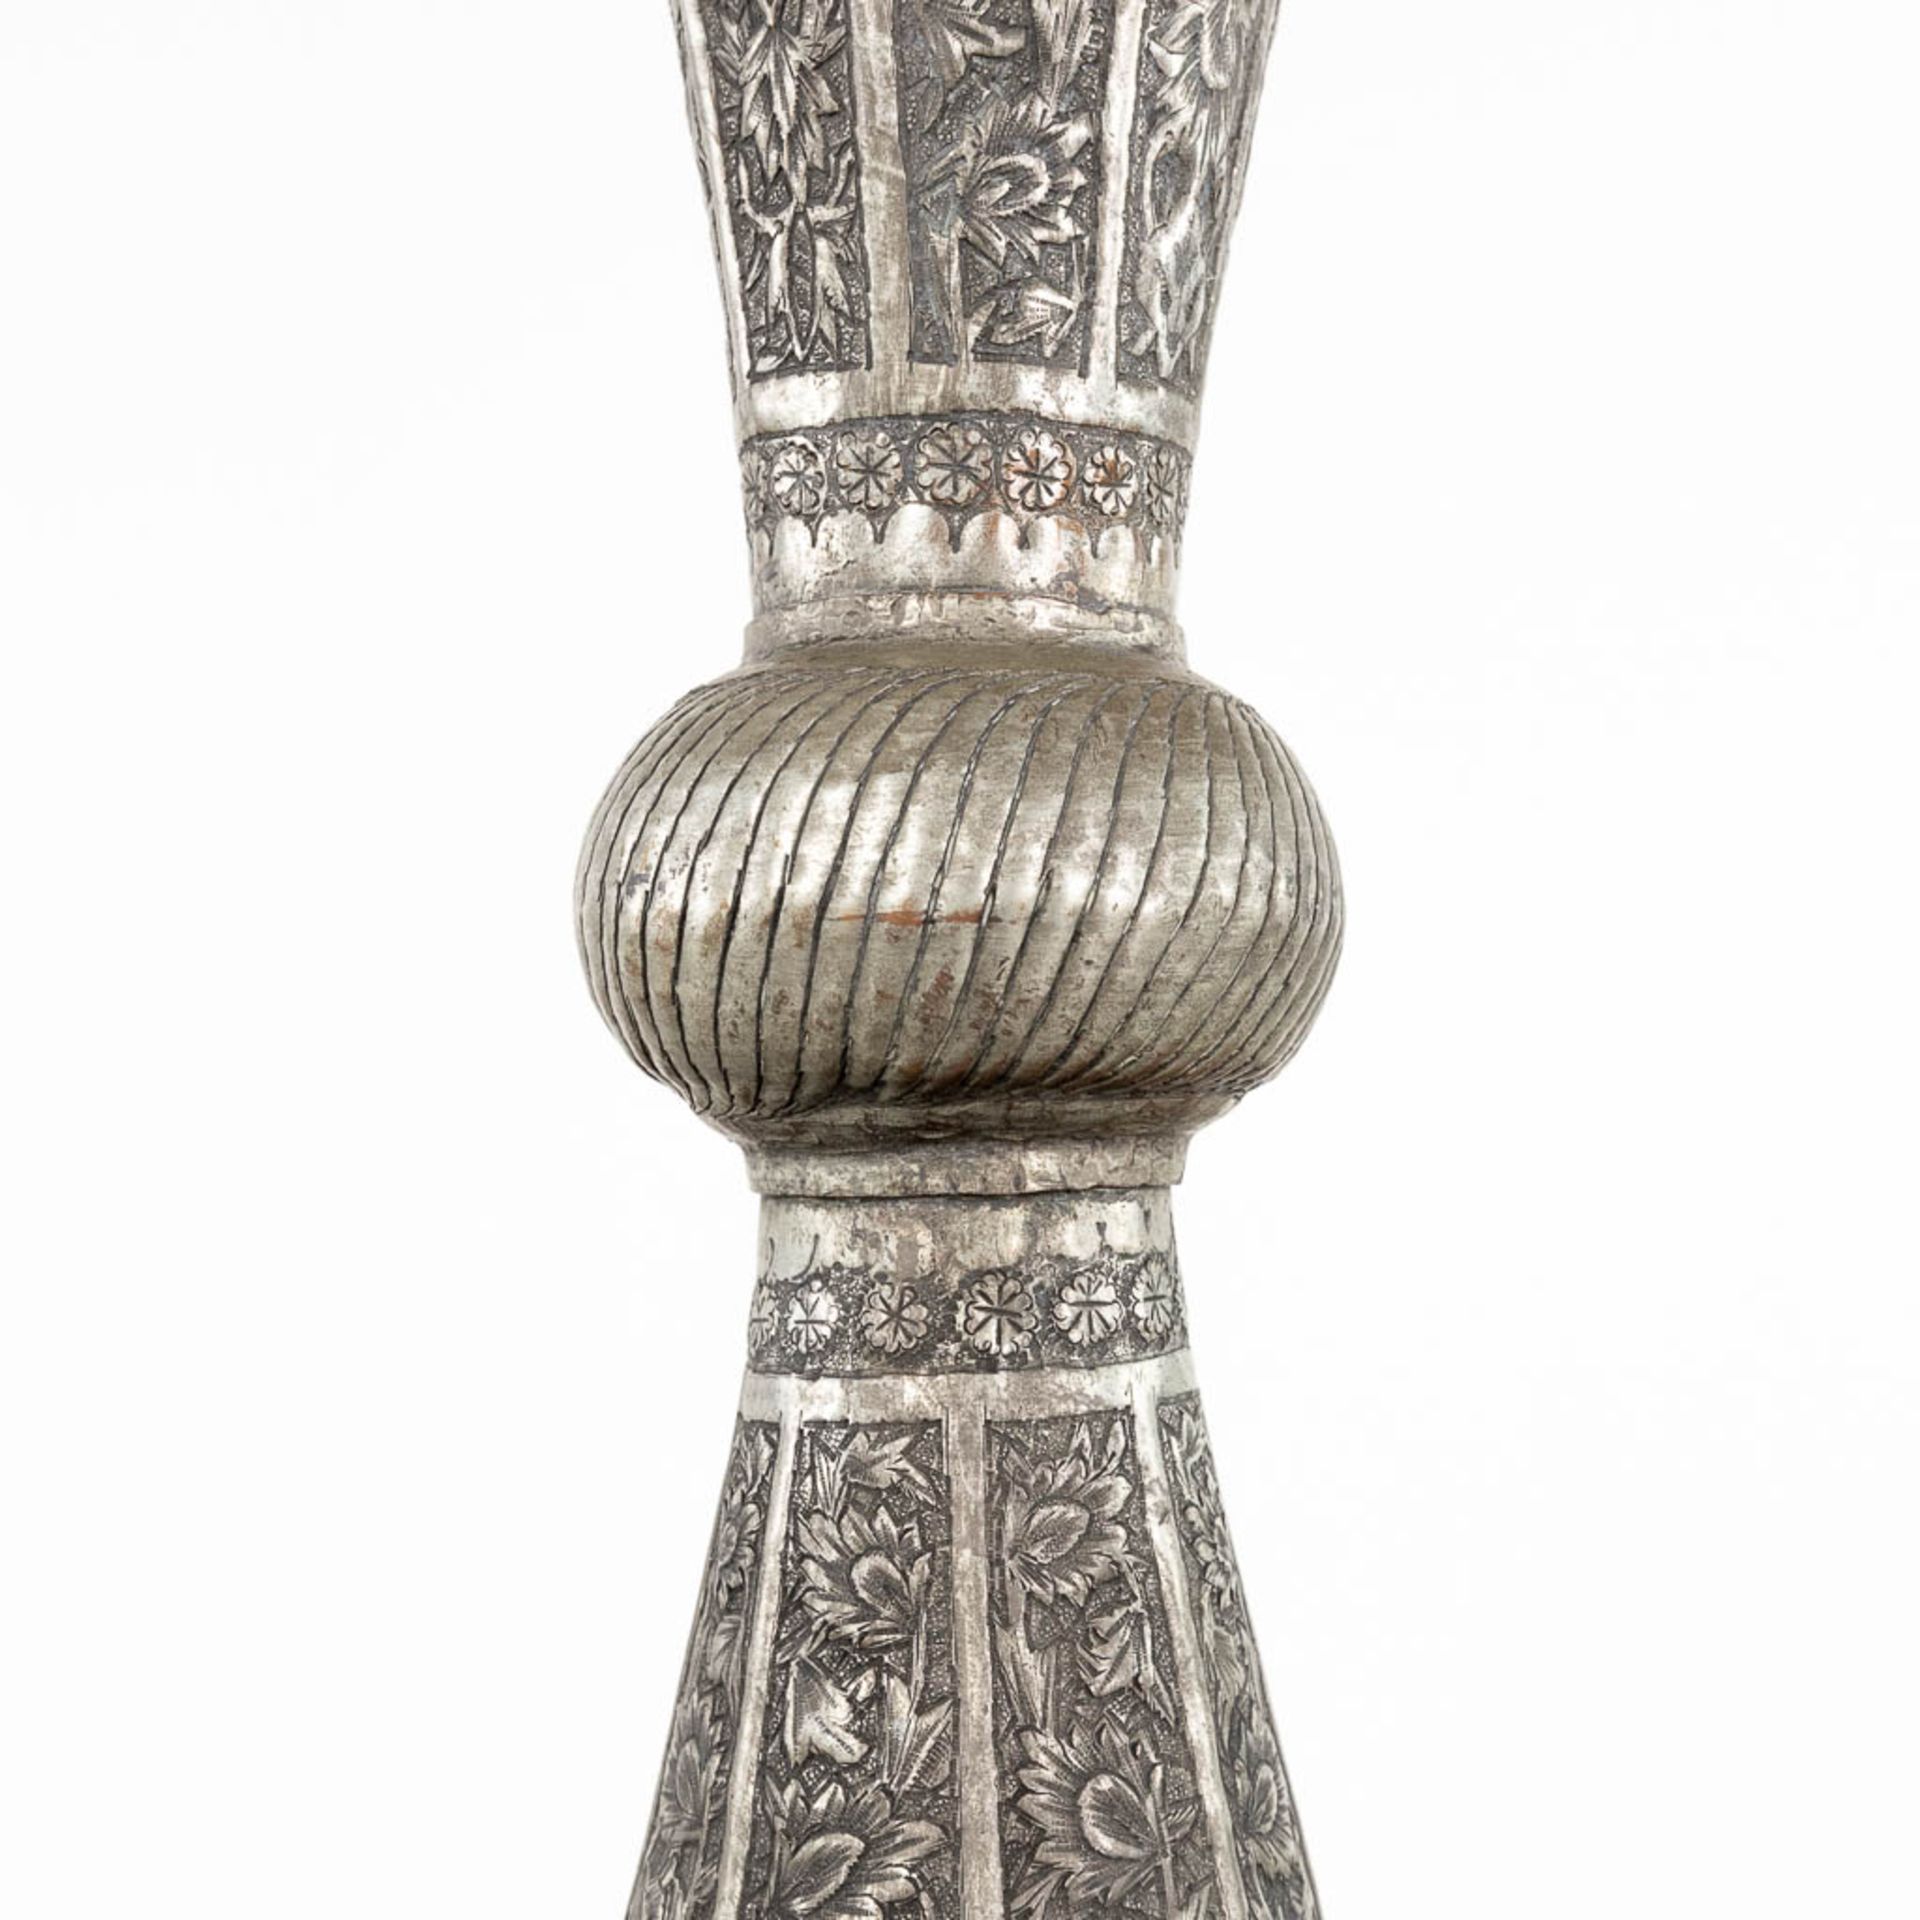 A large decorative vase, India. 19th C. (H:128 x D:32 cm) - Image 8 of 14